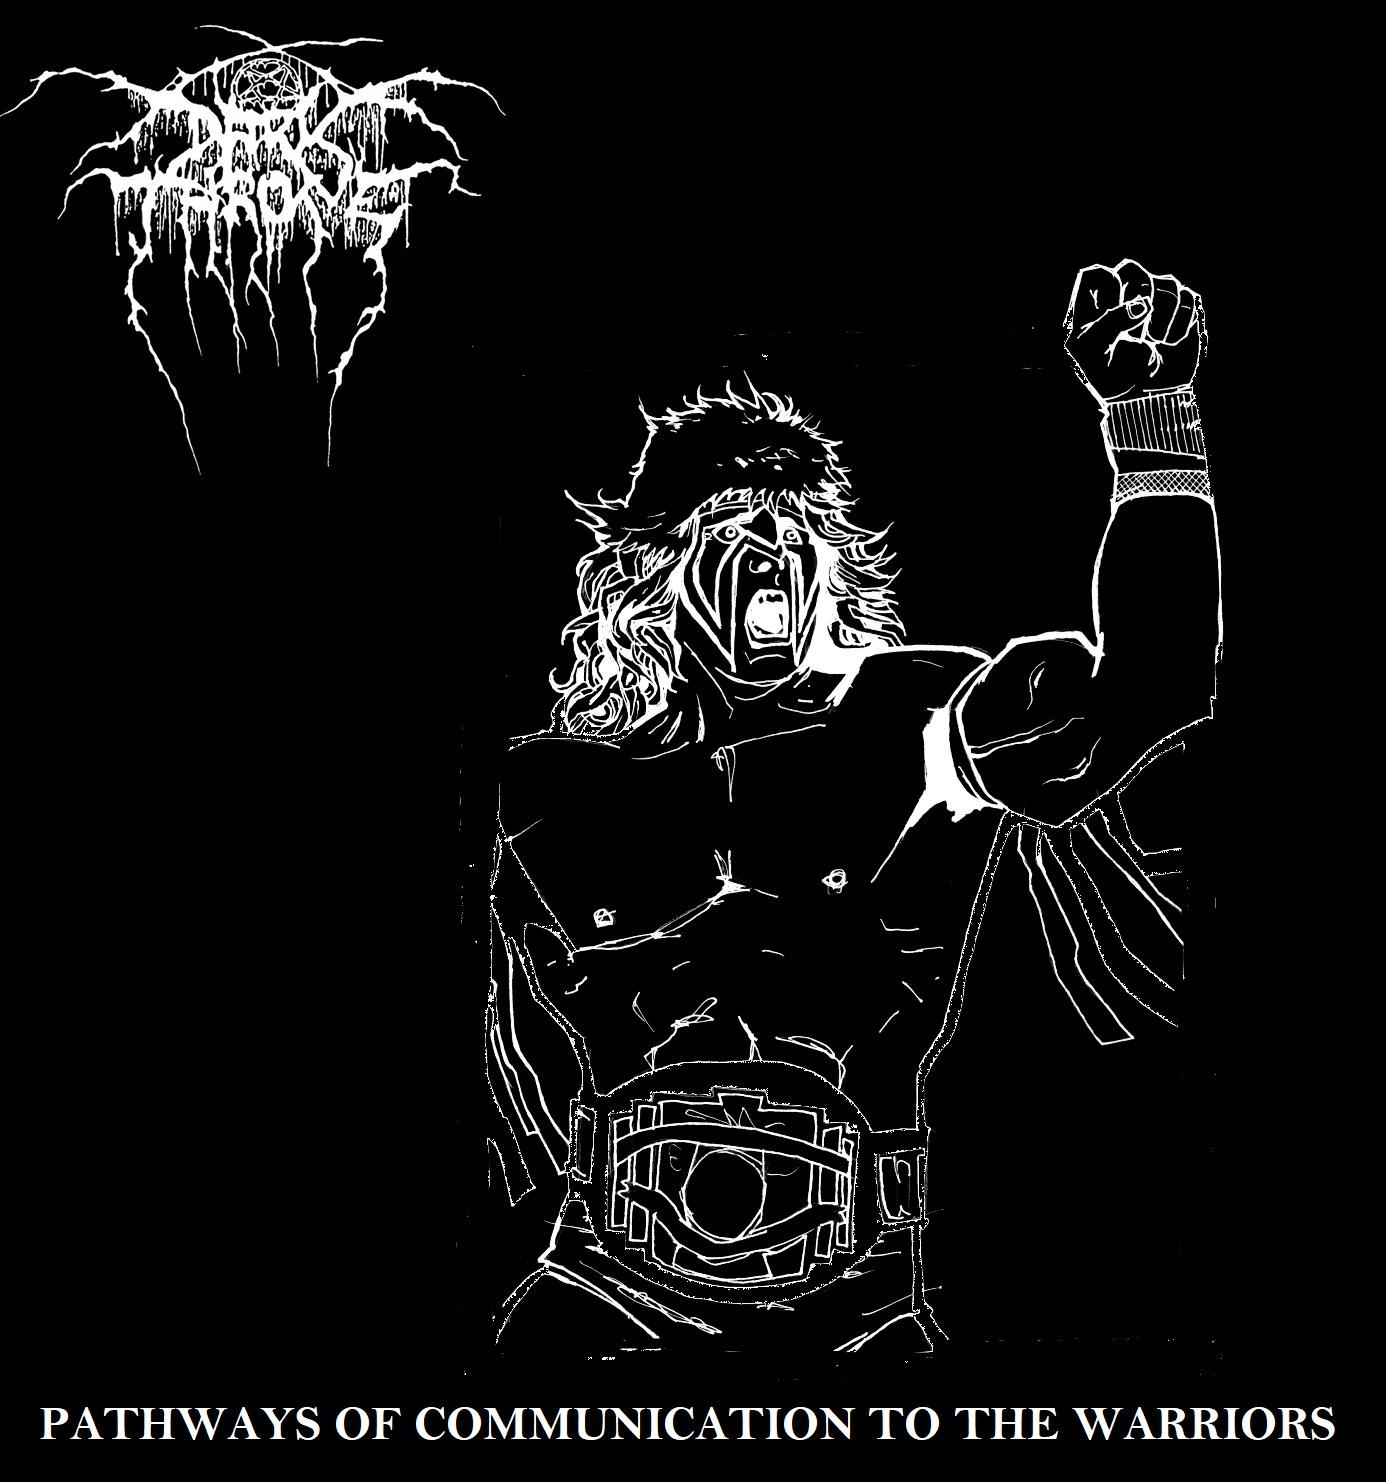 Wrestling Image & Quotes Turned Into Black Metal Album